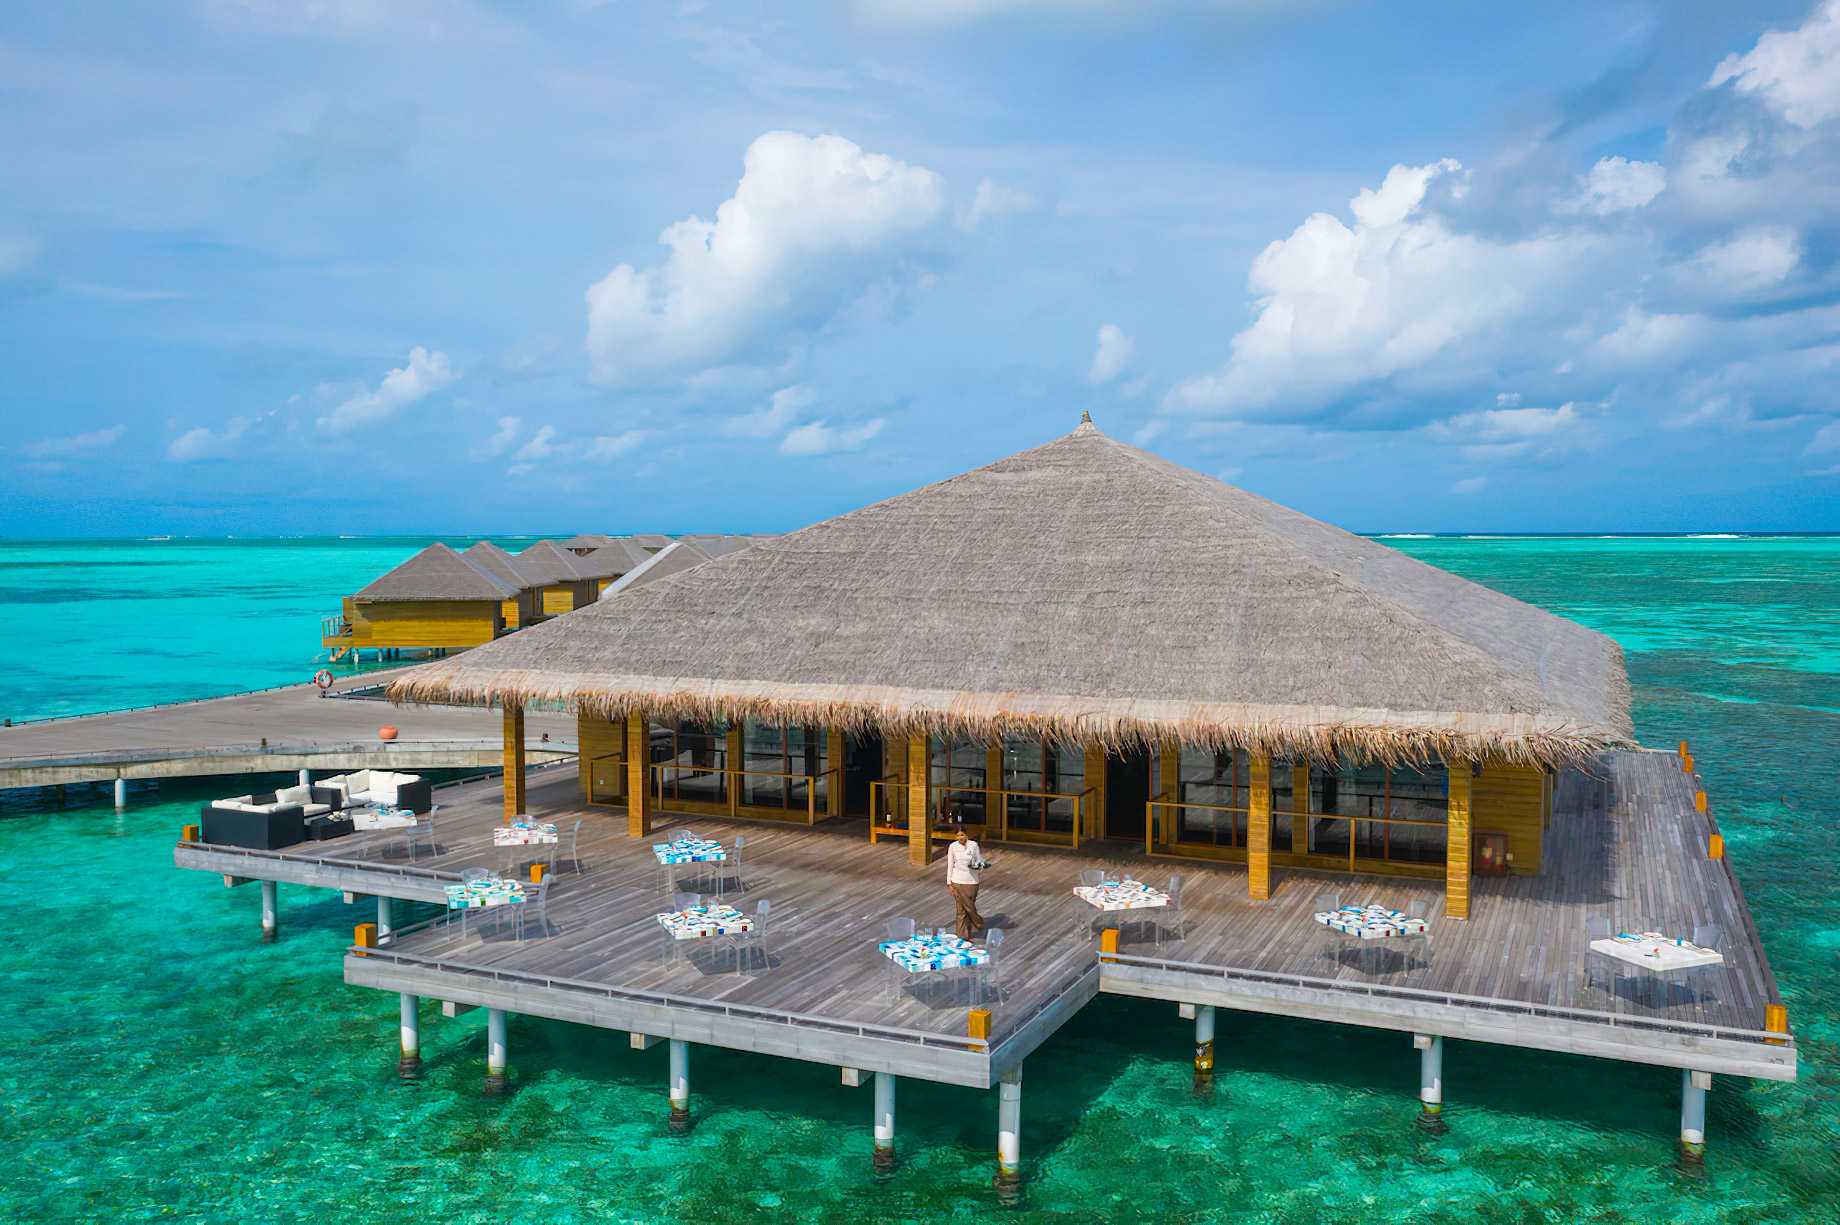 Cocoon Maldives Resort - Ookolhufinolhu, Lhaviyani Atoll, Maldives - Manta Overwater Restaurant Dining